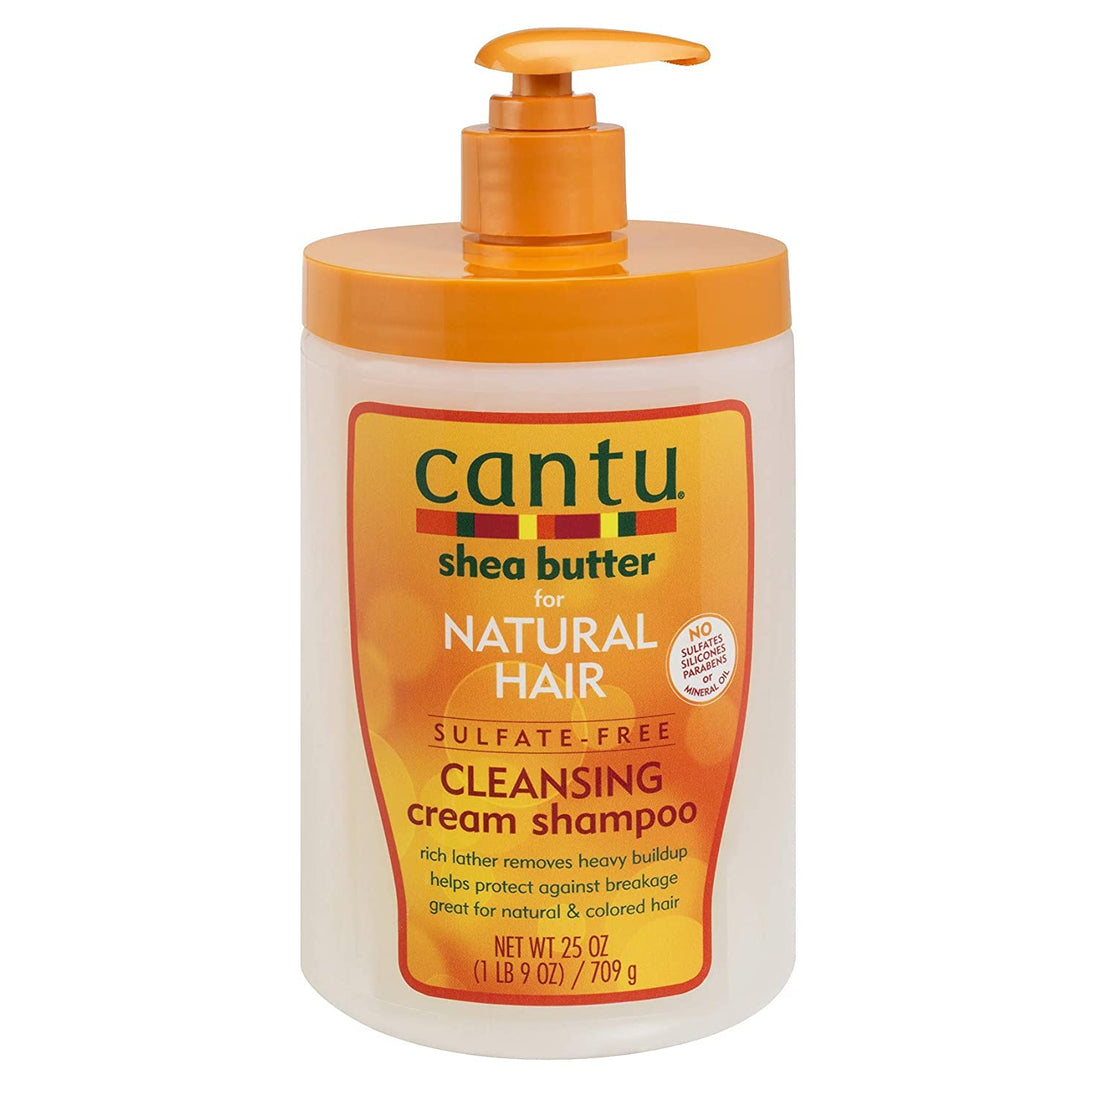 Cantu Shea Butter Cleansing Cream Shampoo For Natural Hair 709g